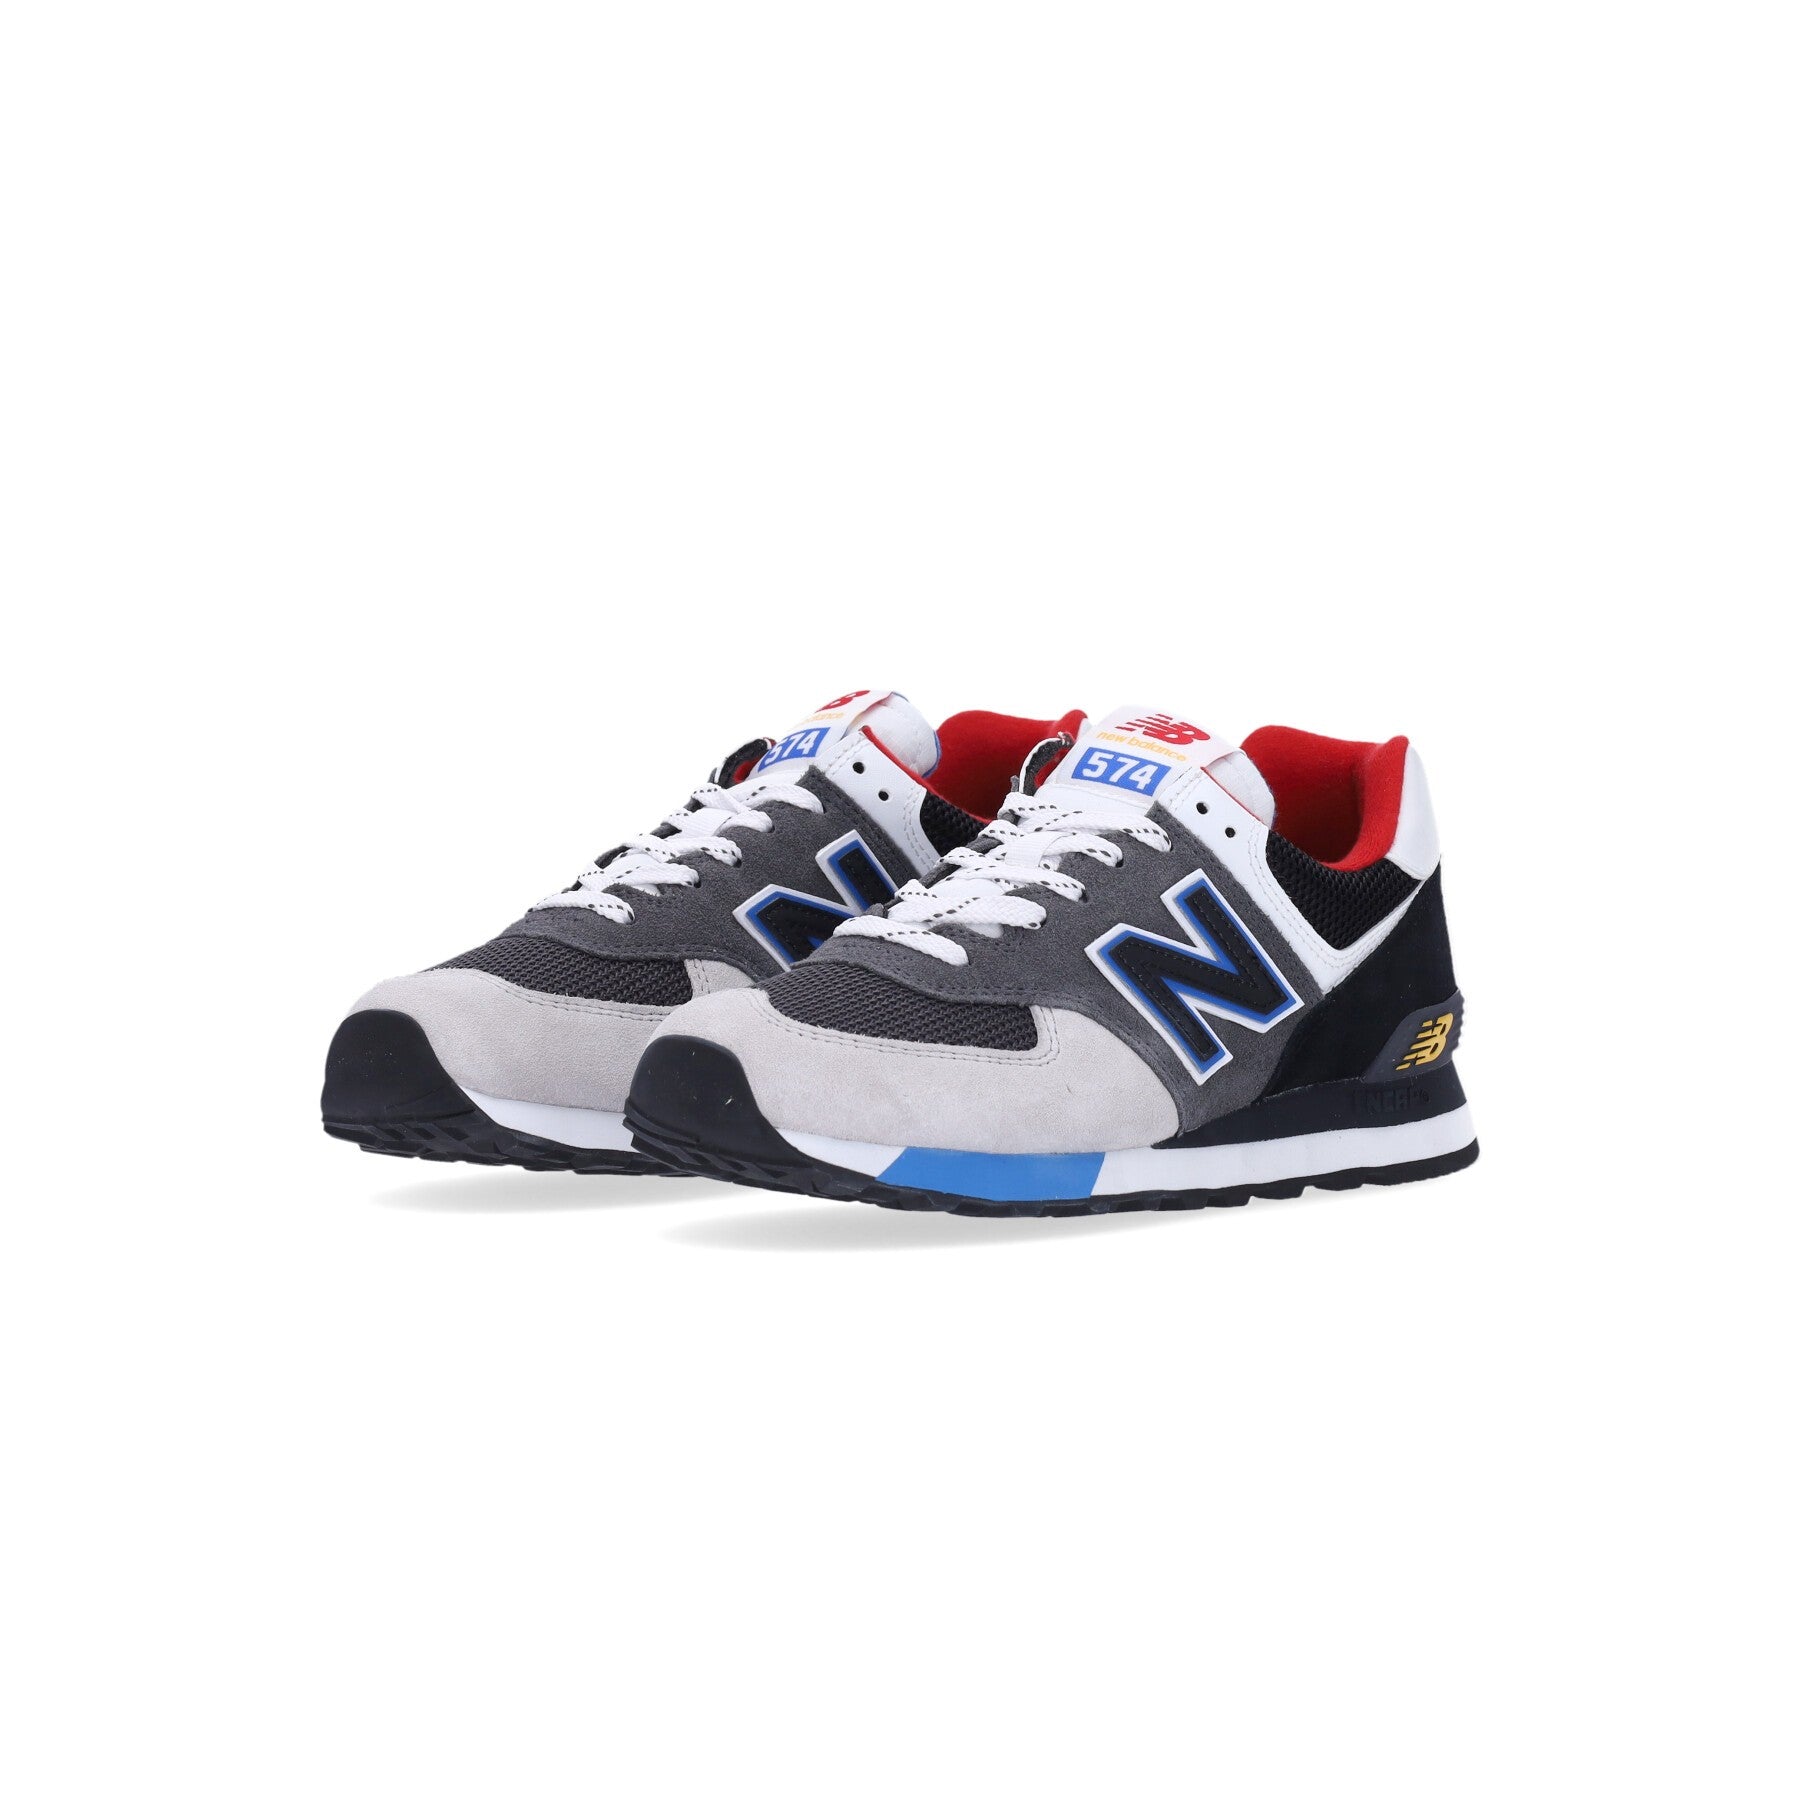 Low Men's Shoe 574 Black/white/blue/red